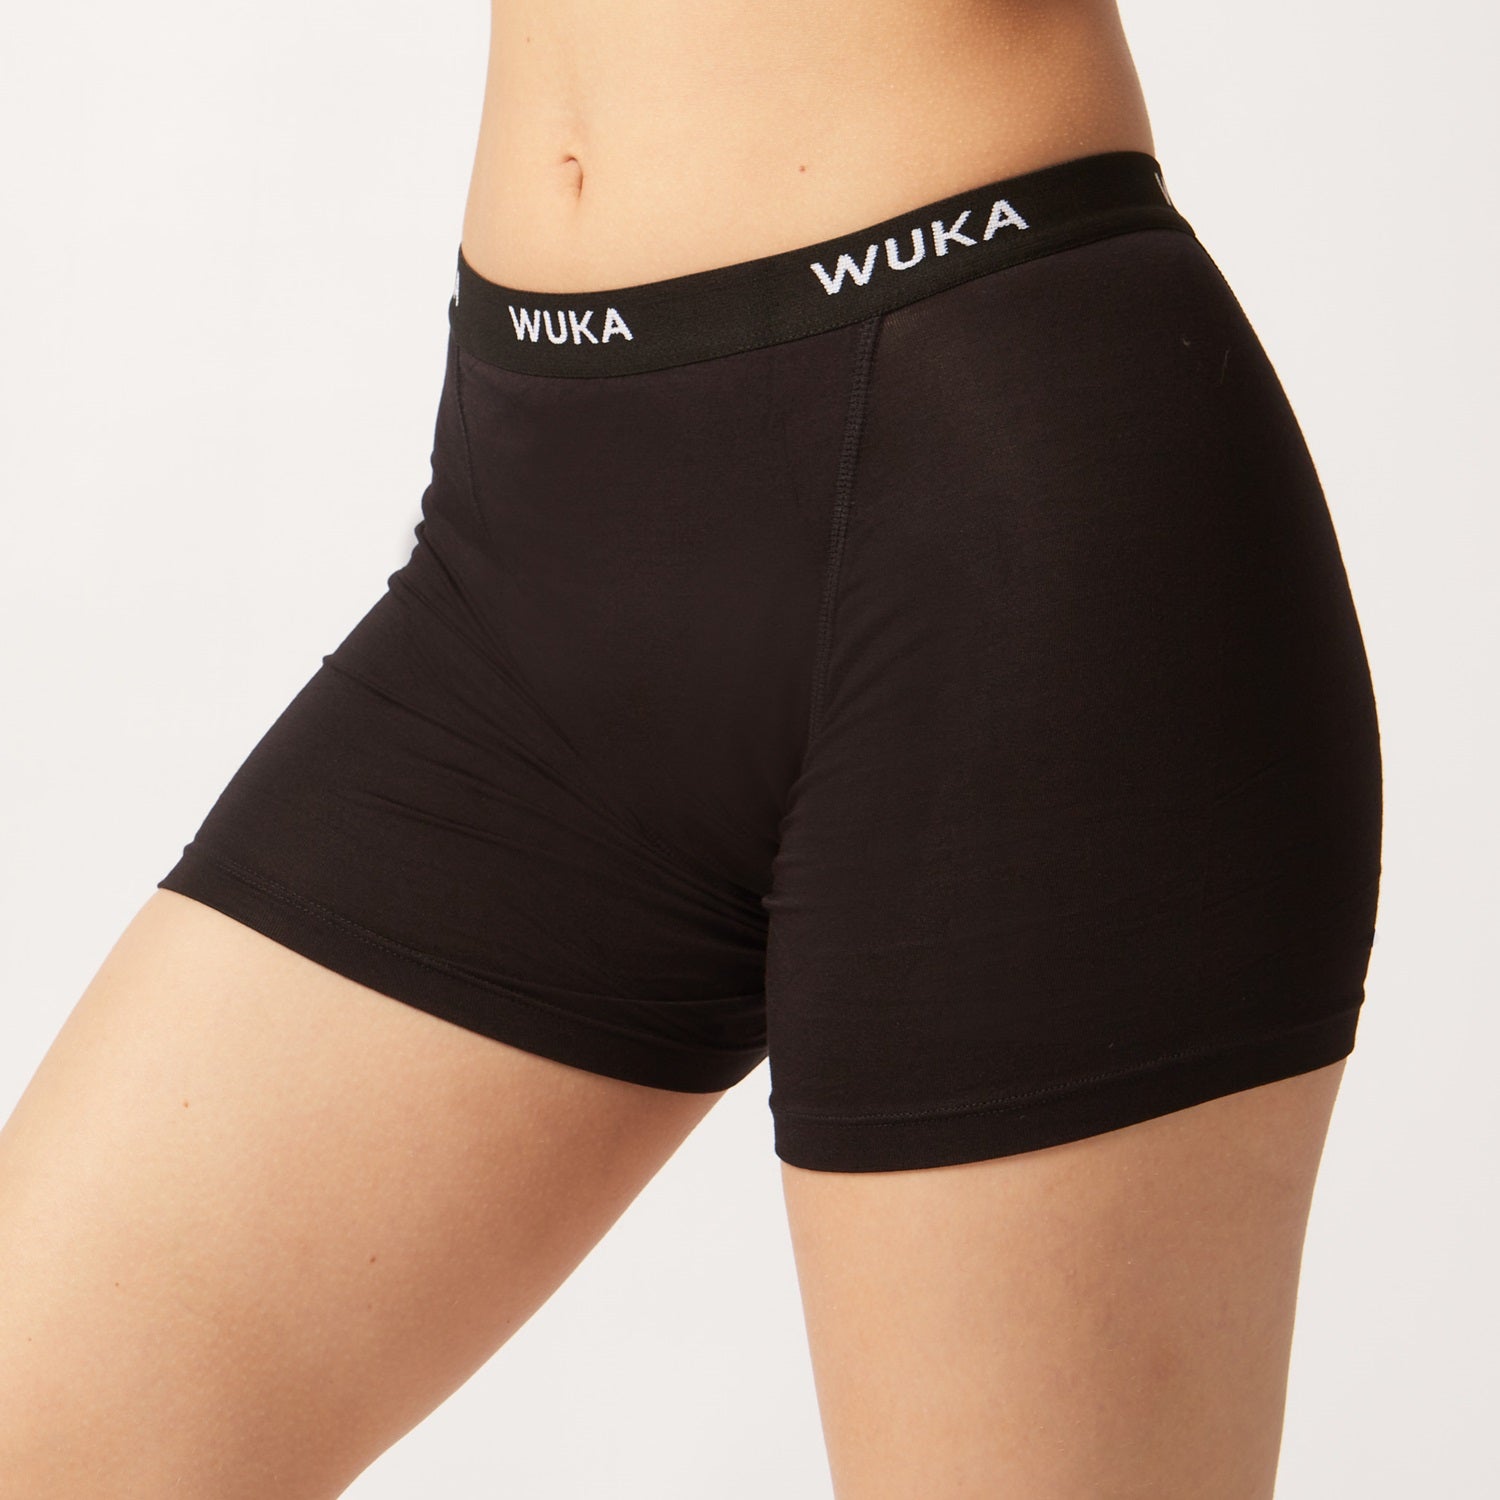 WUKA Period Sports Shorts - Medium flow